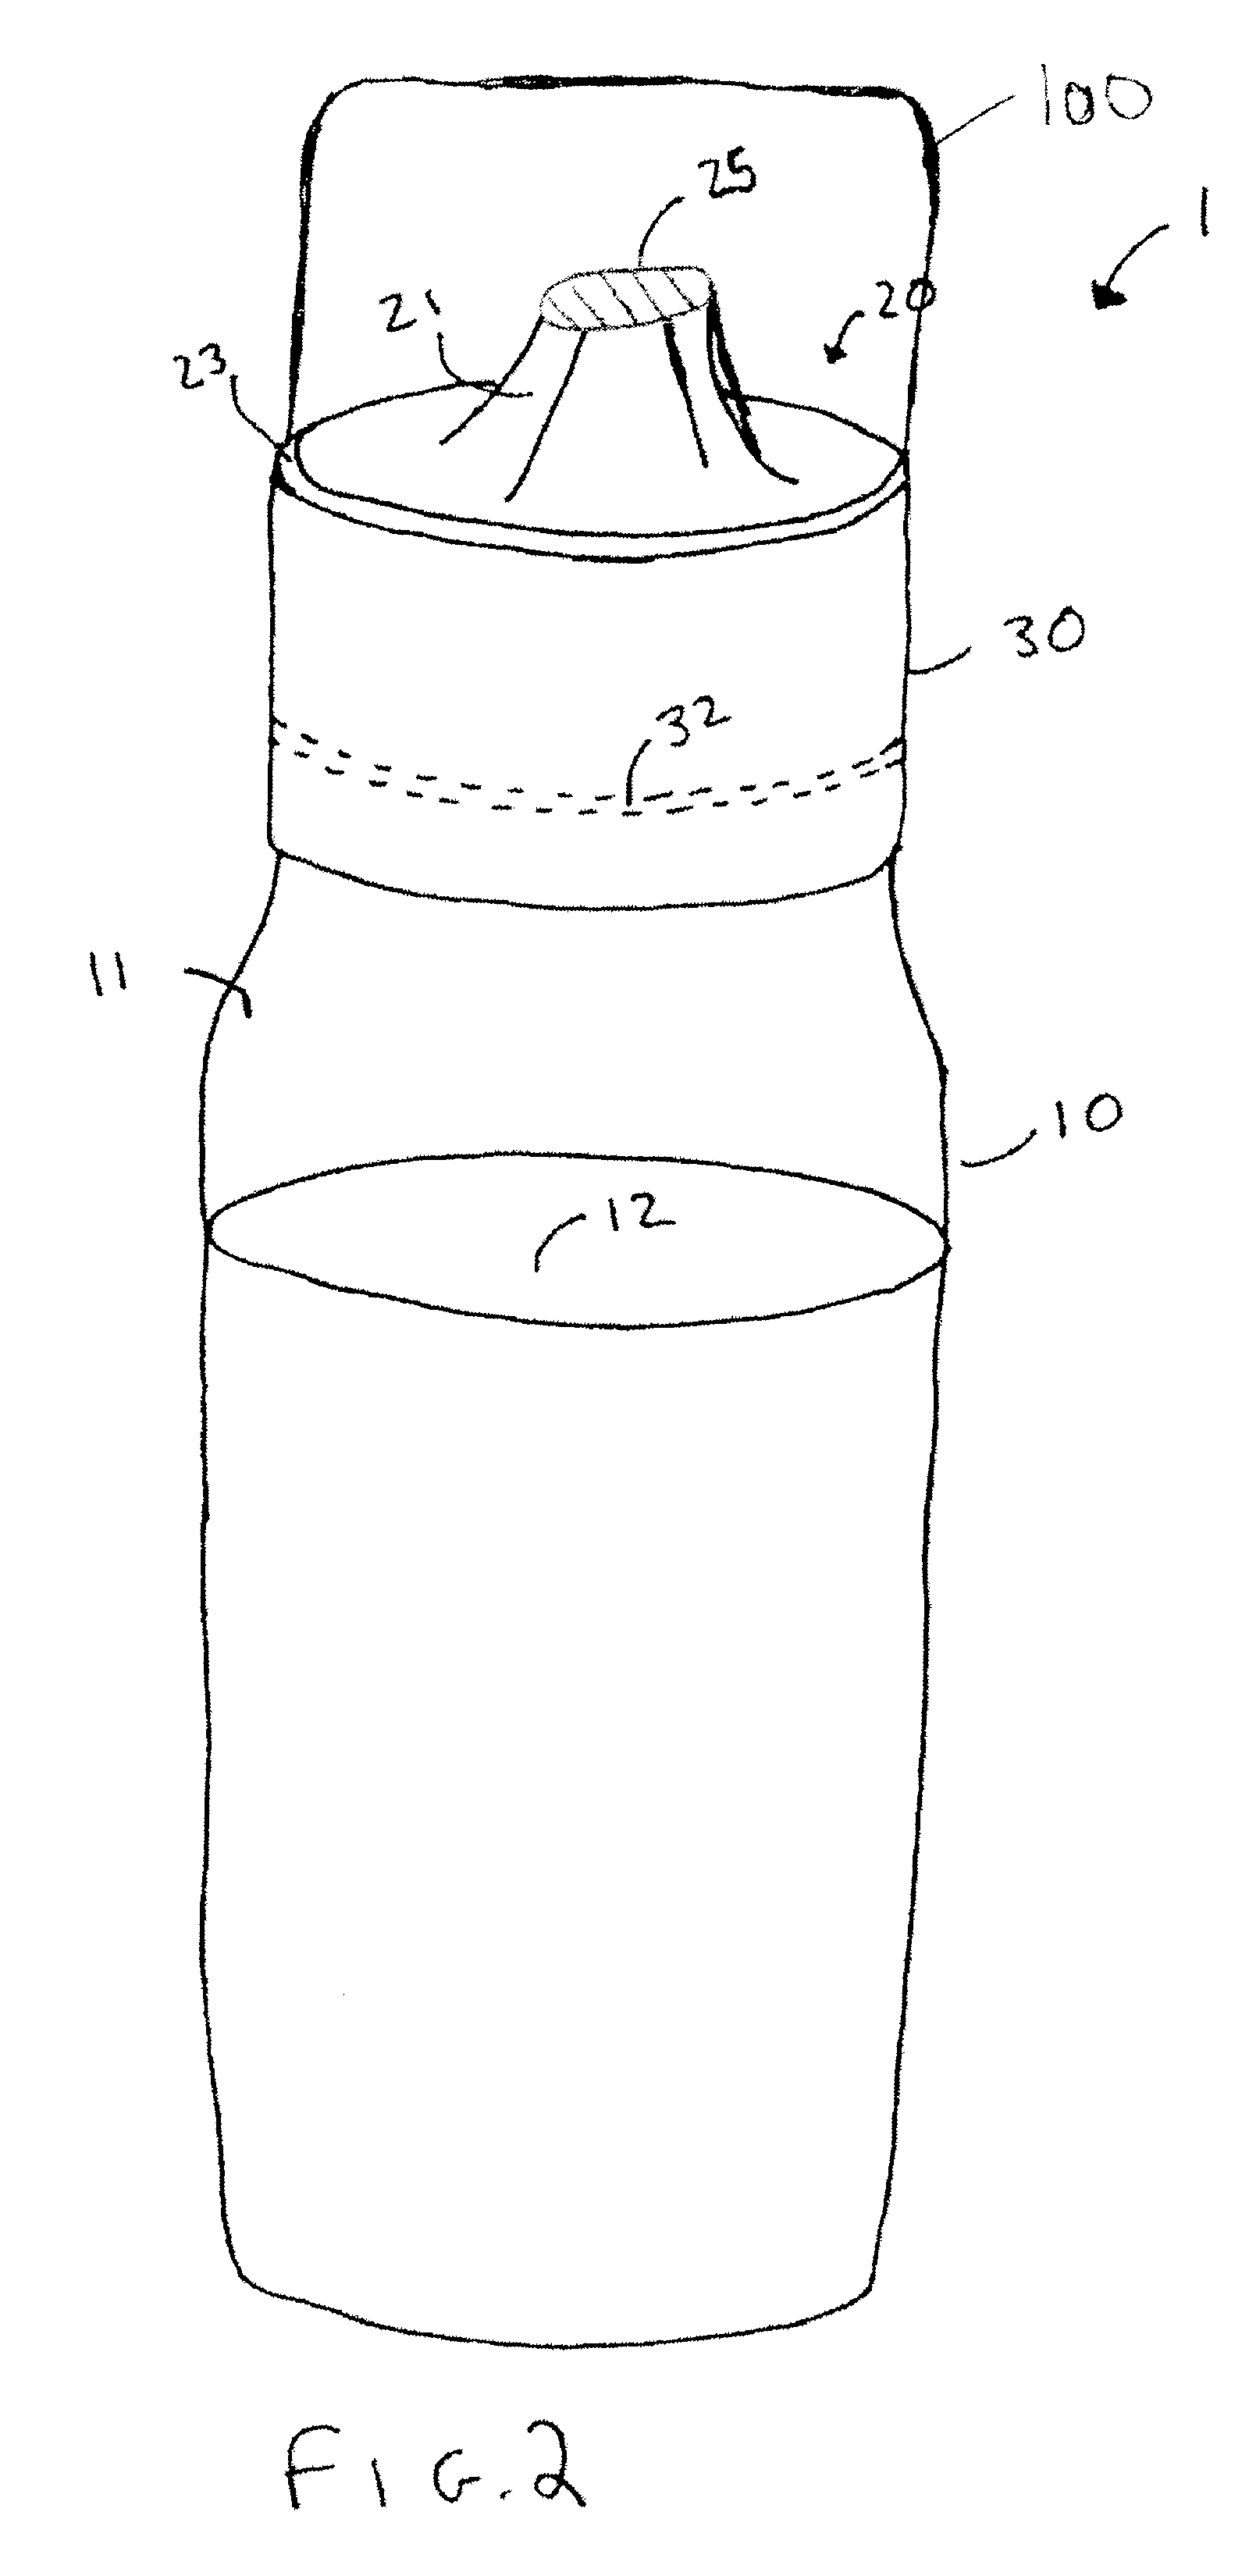 Beverage dispenser having an airtight valve and seal